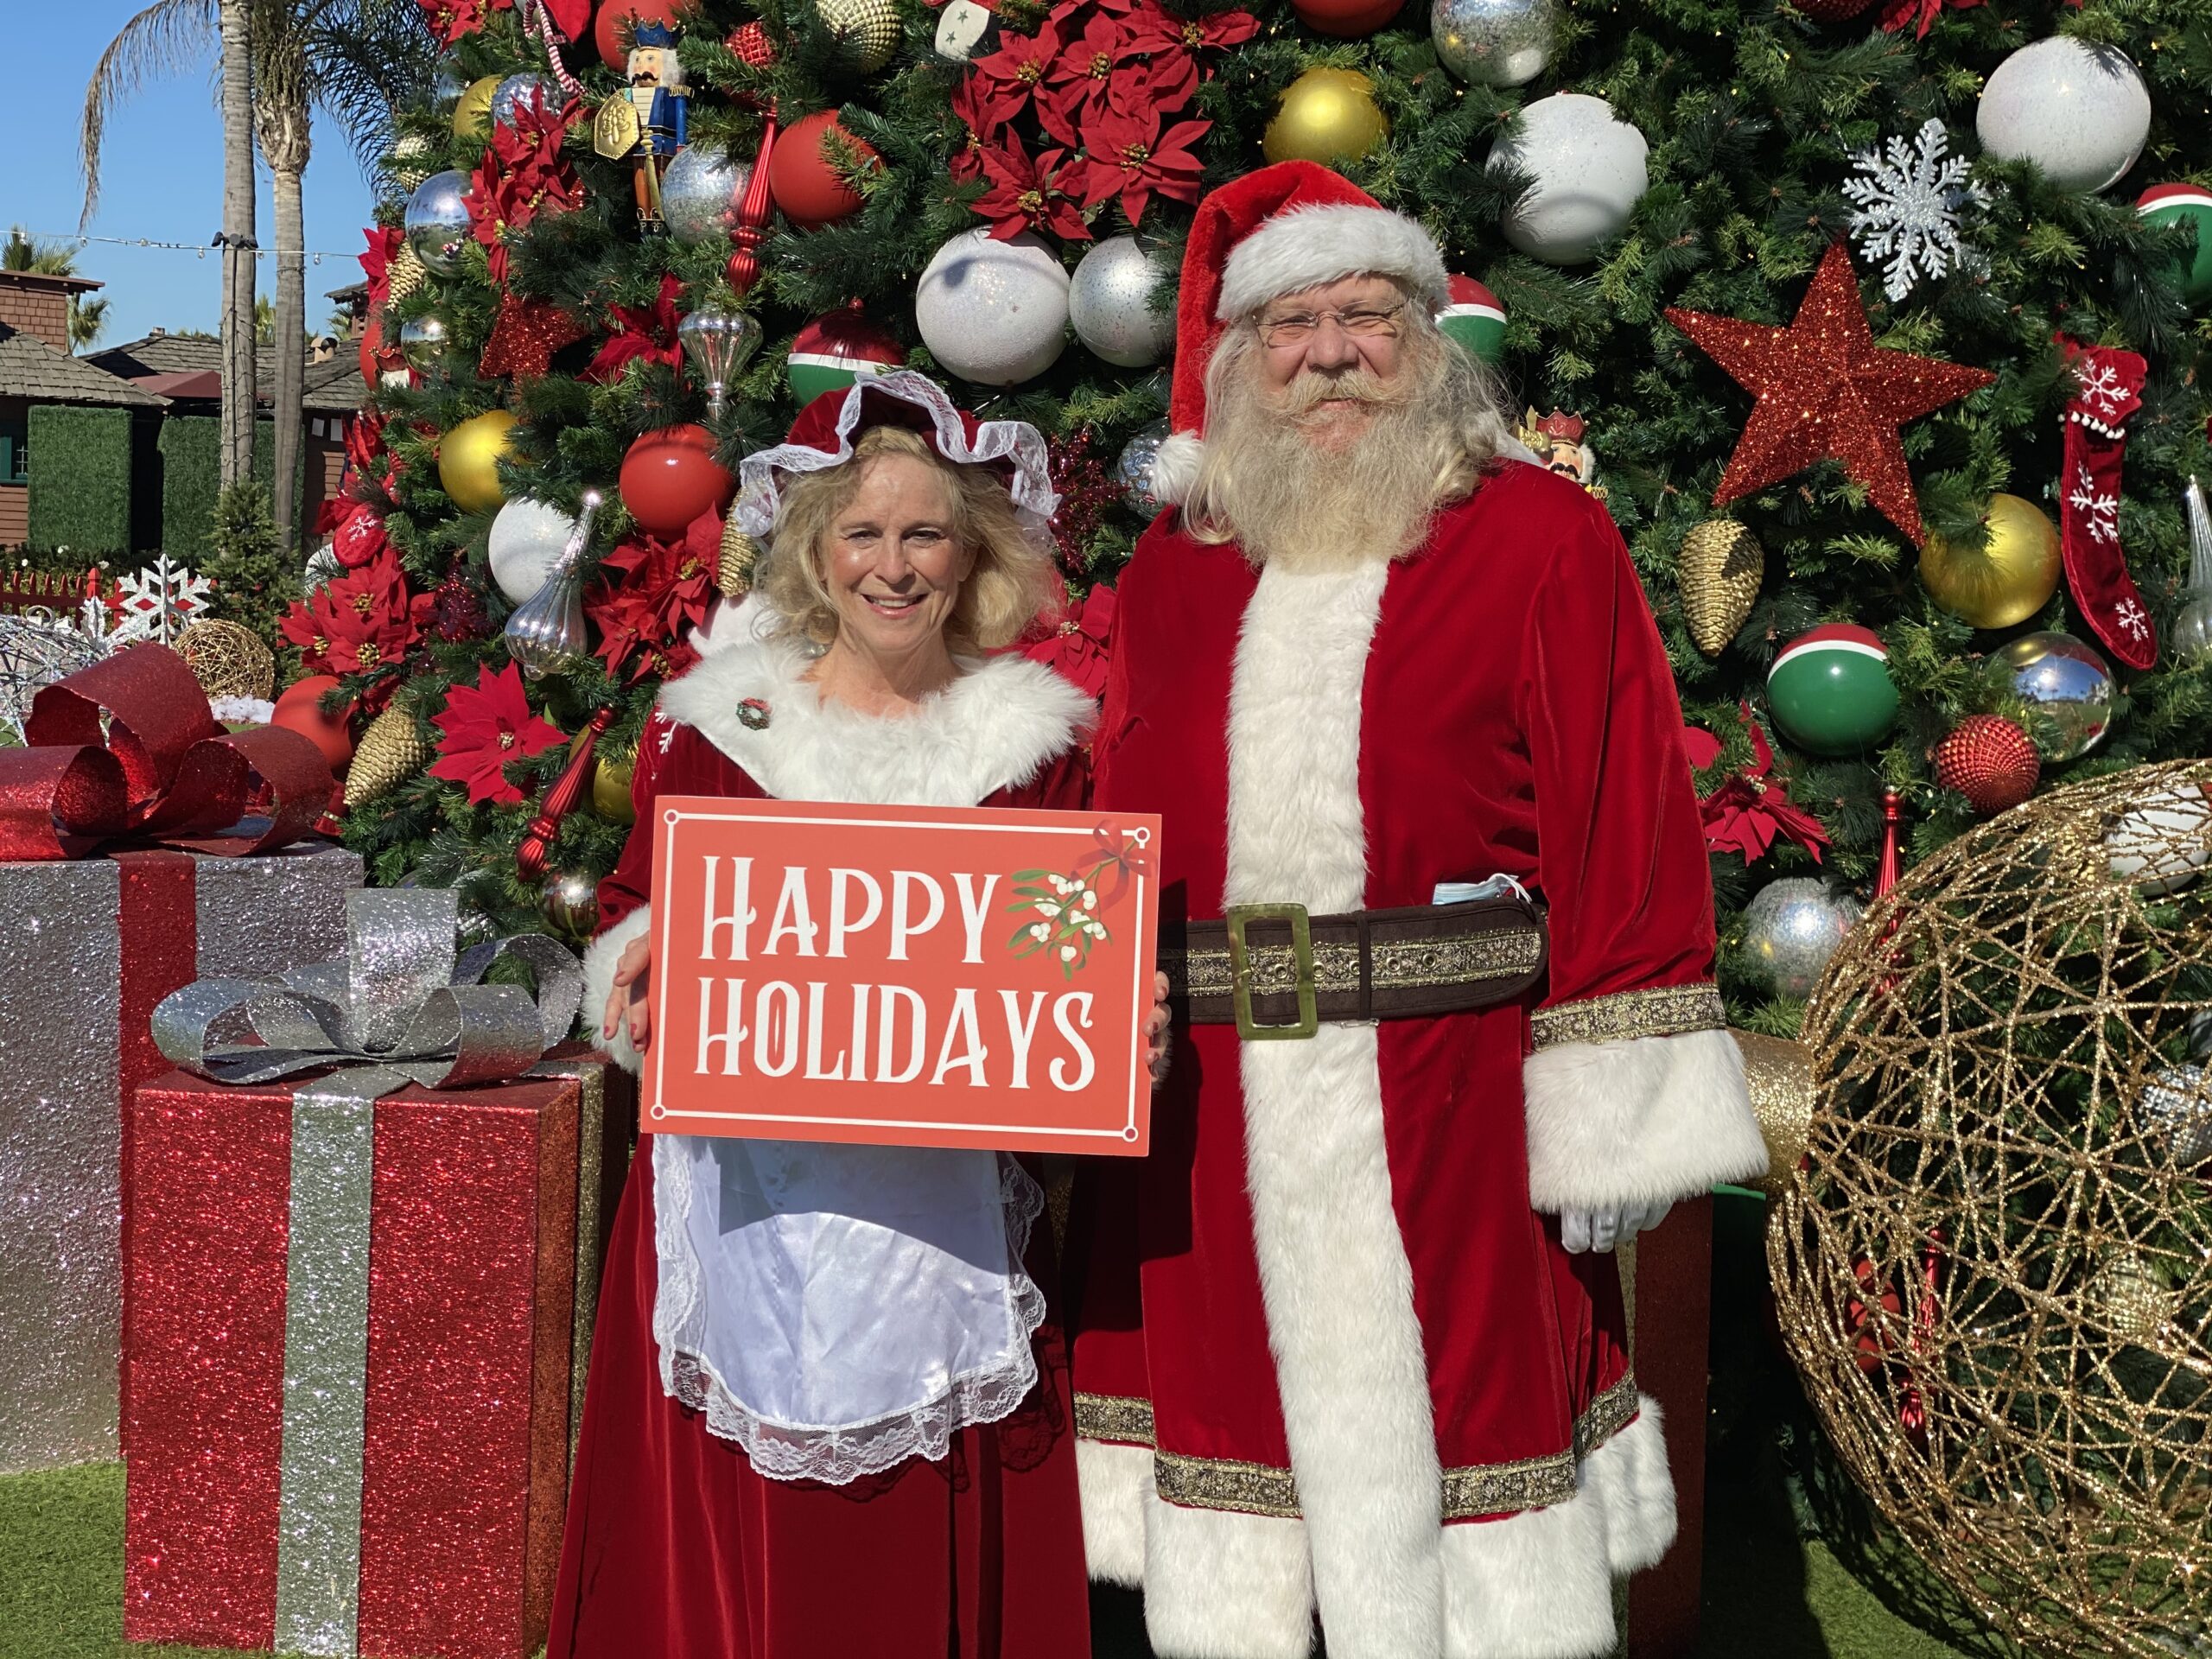 Happy Holidays from Coronado Coronado Visitor Center